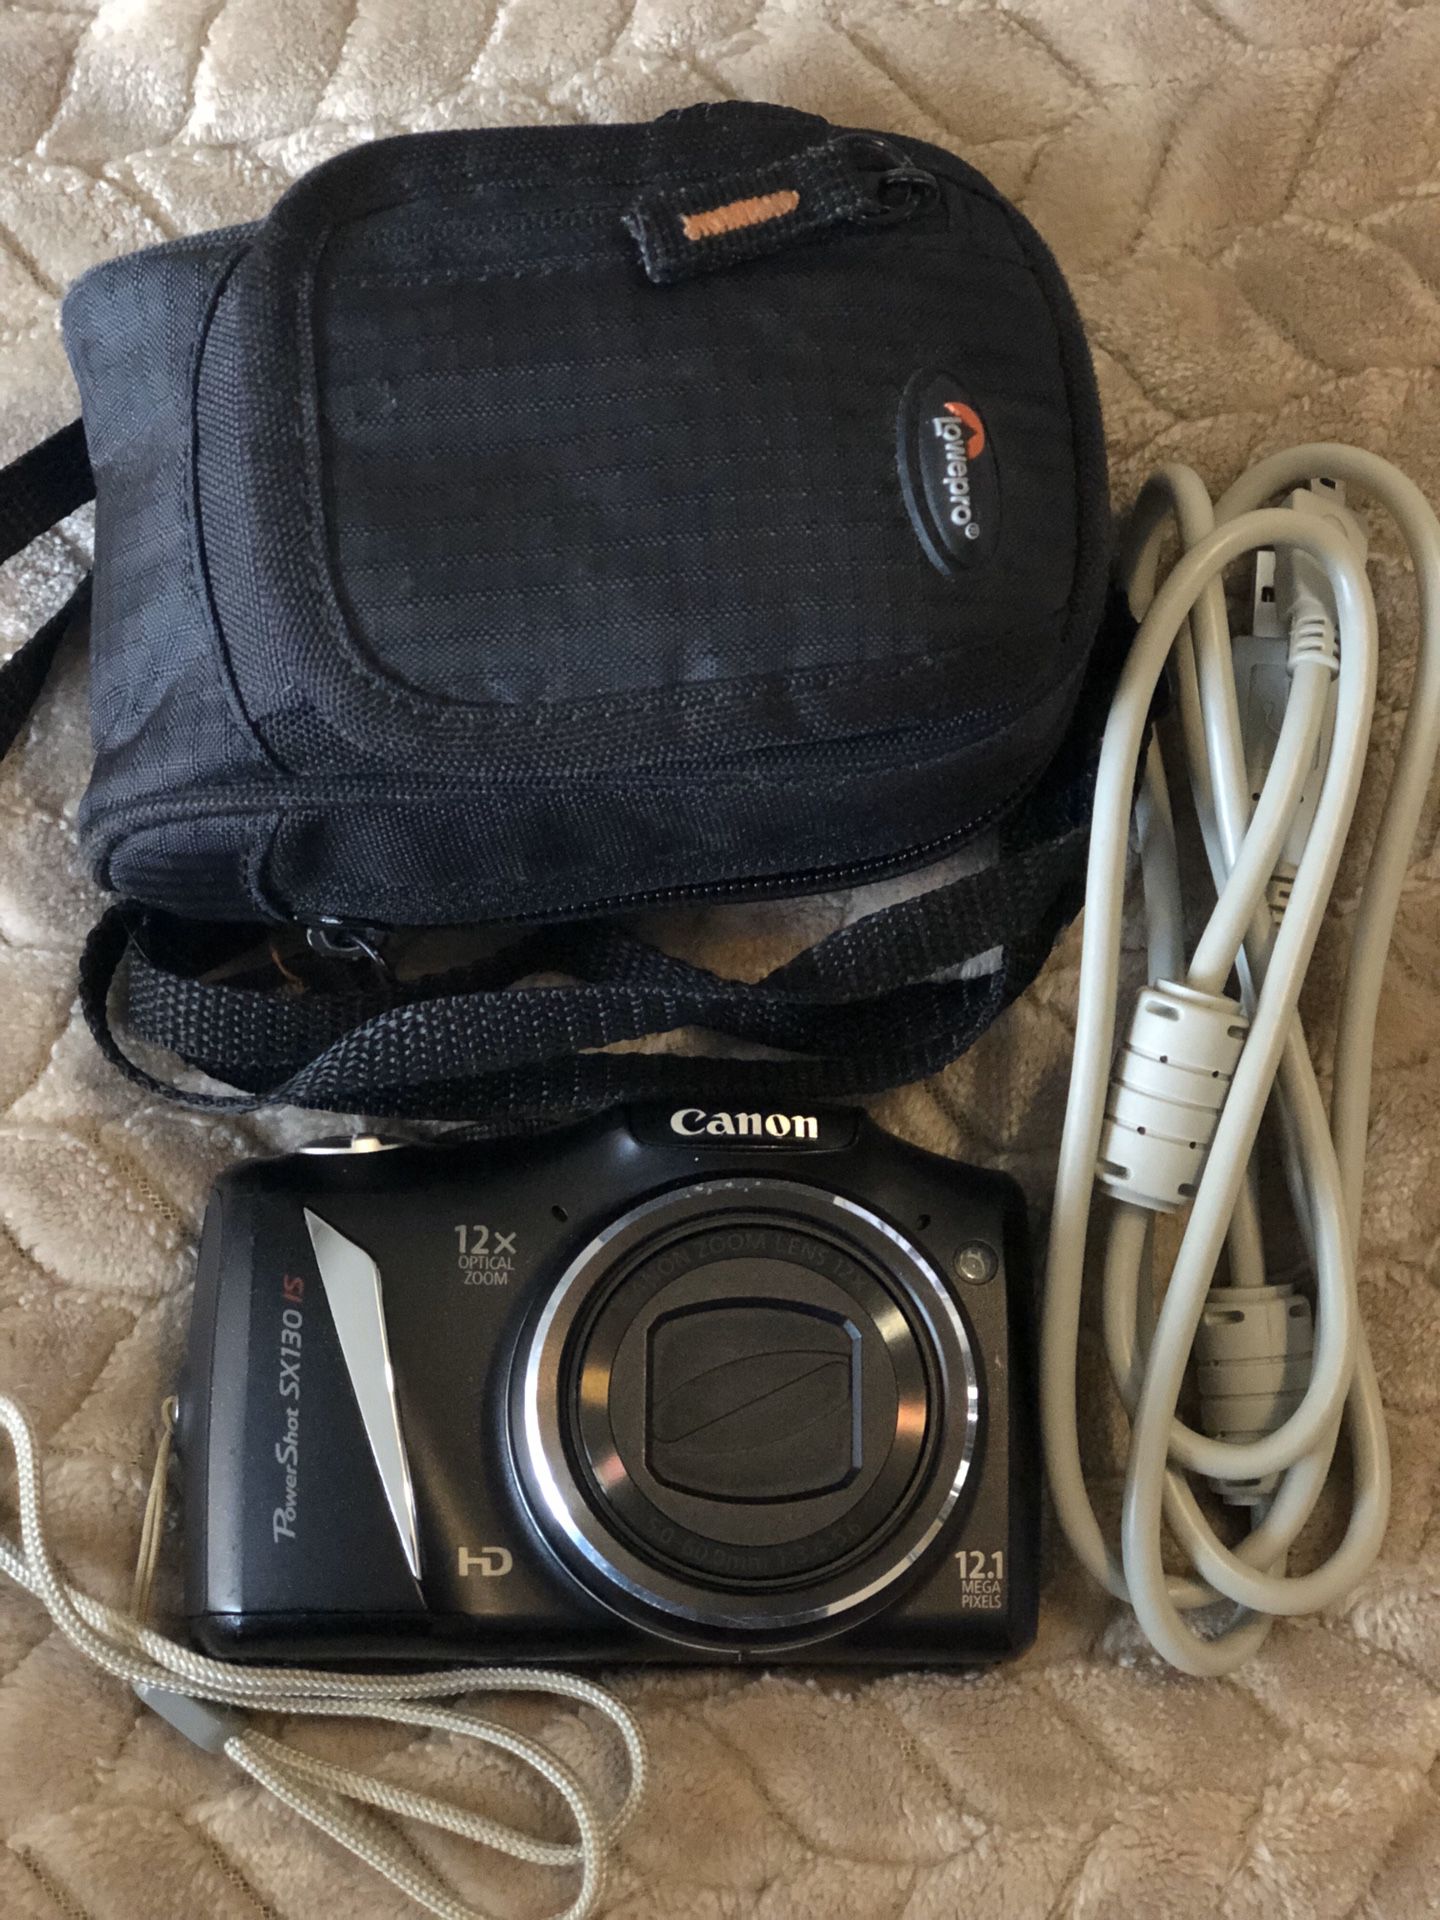 Canon PowerShot SX130IS 12.1MP Digital Camera